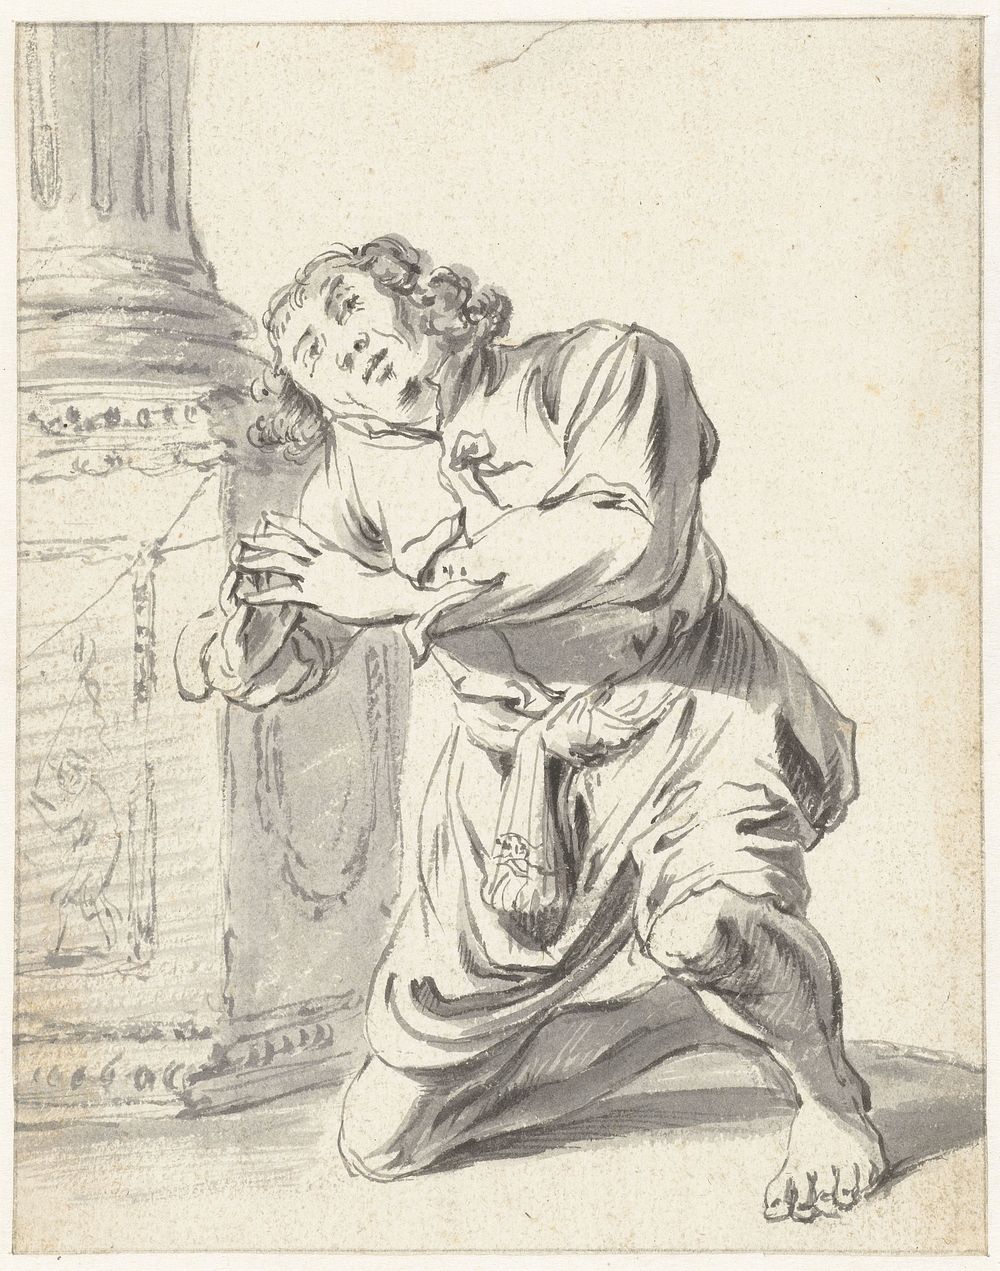 Knielende man (1606 - 1674) by Leonaert Bramer and Sebastiaen Vrancx